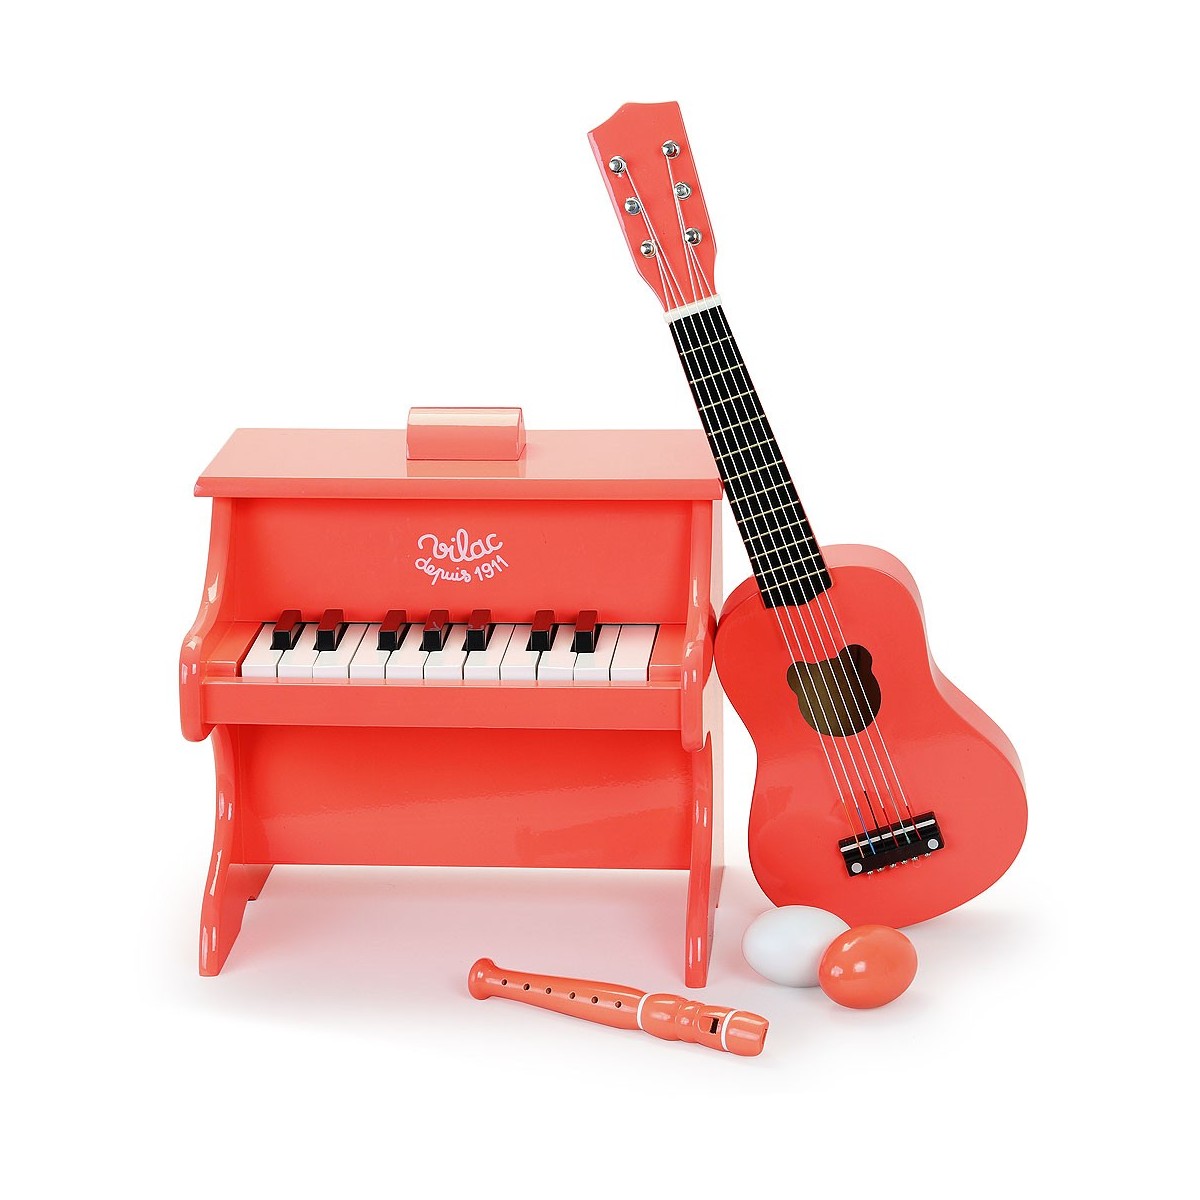 Piano de madera de juguete con partituras